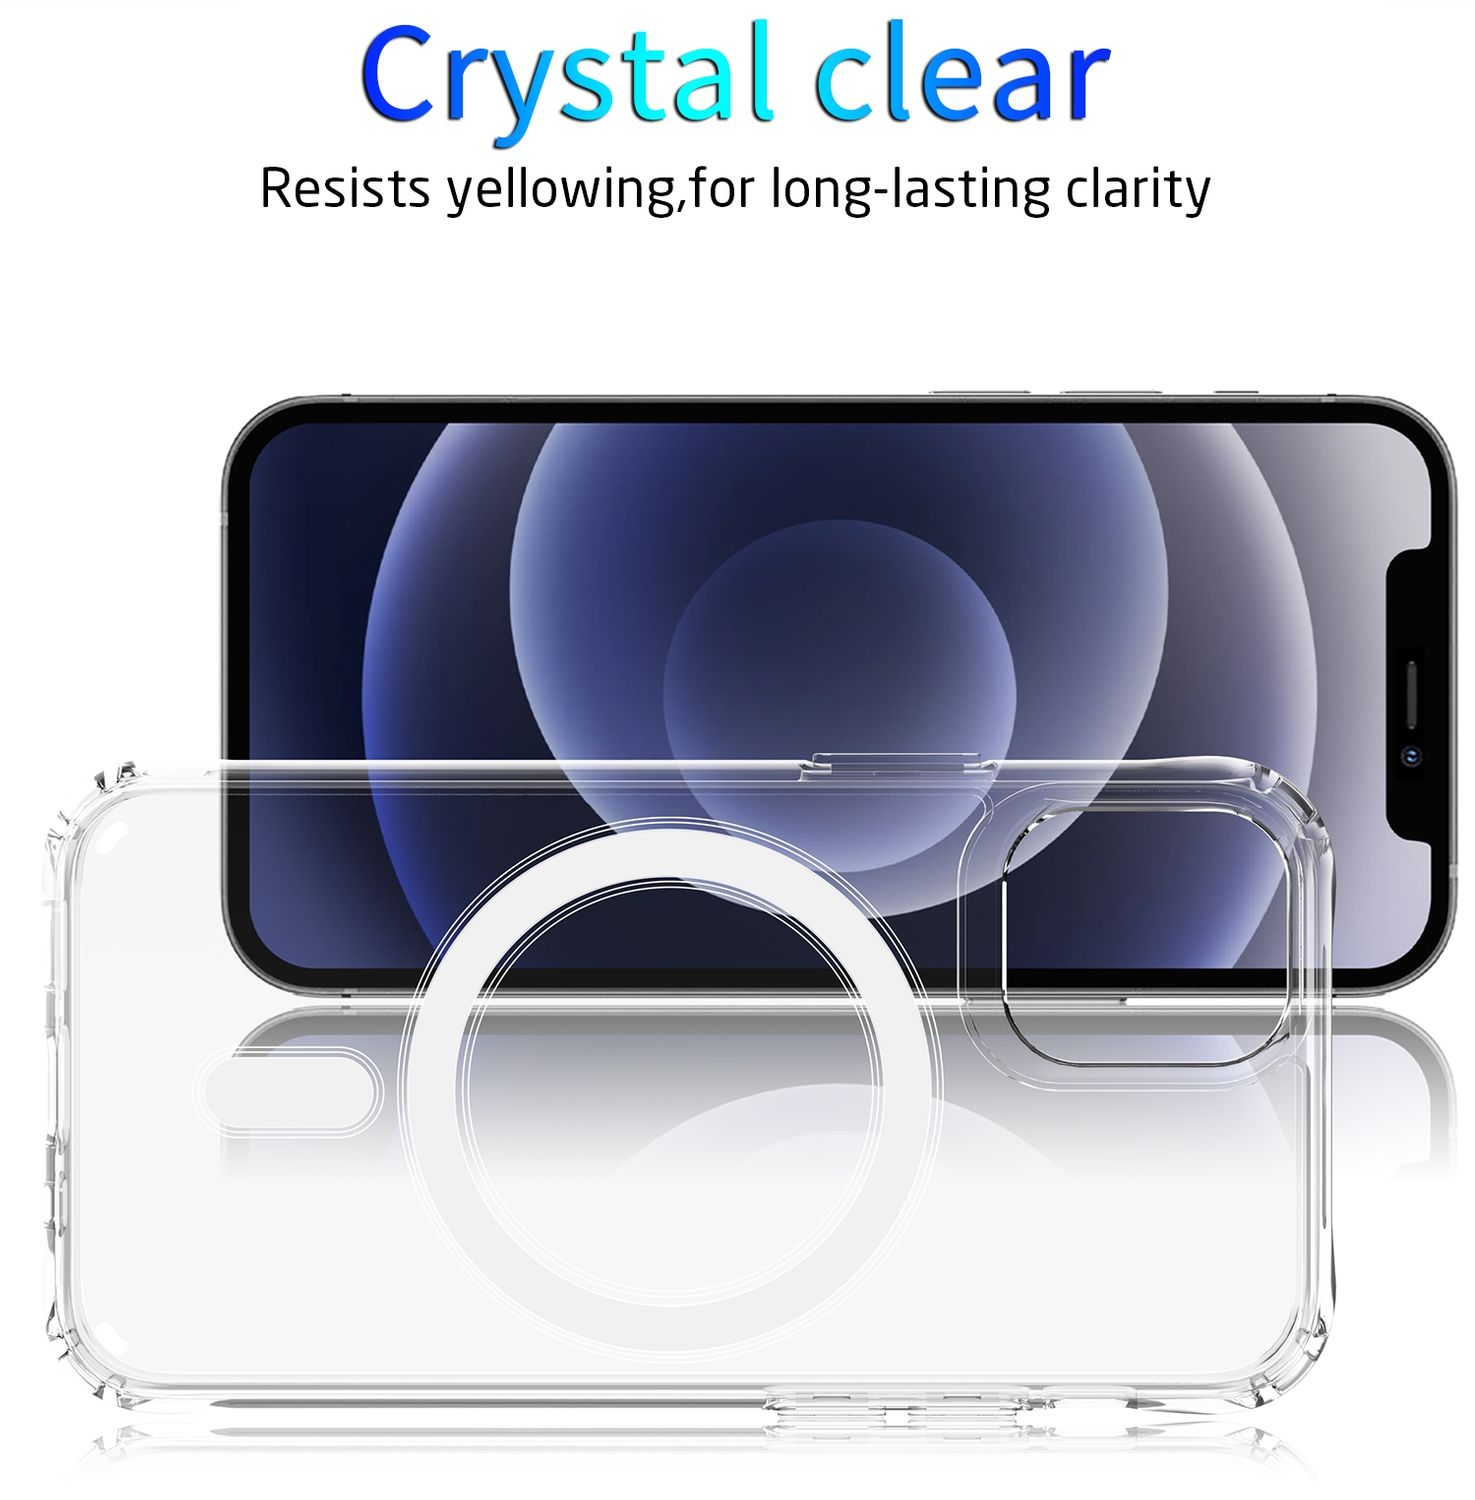 KÖNIG DESIGN Case, Transparent Backcover, Mini, iPhone 12 Apple